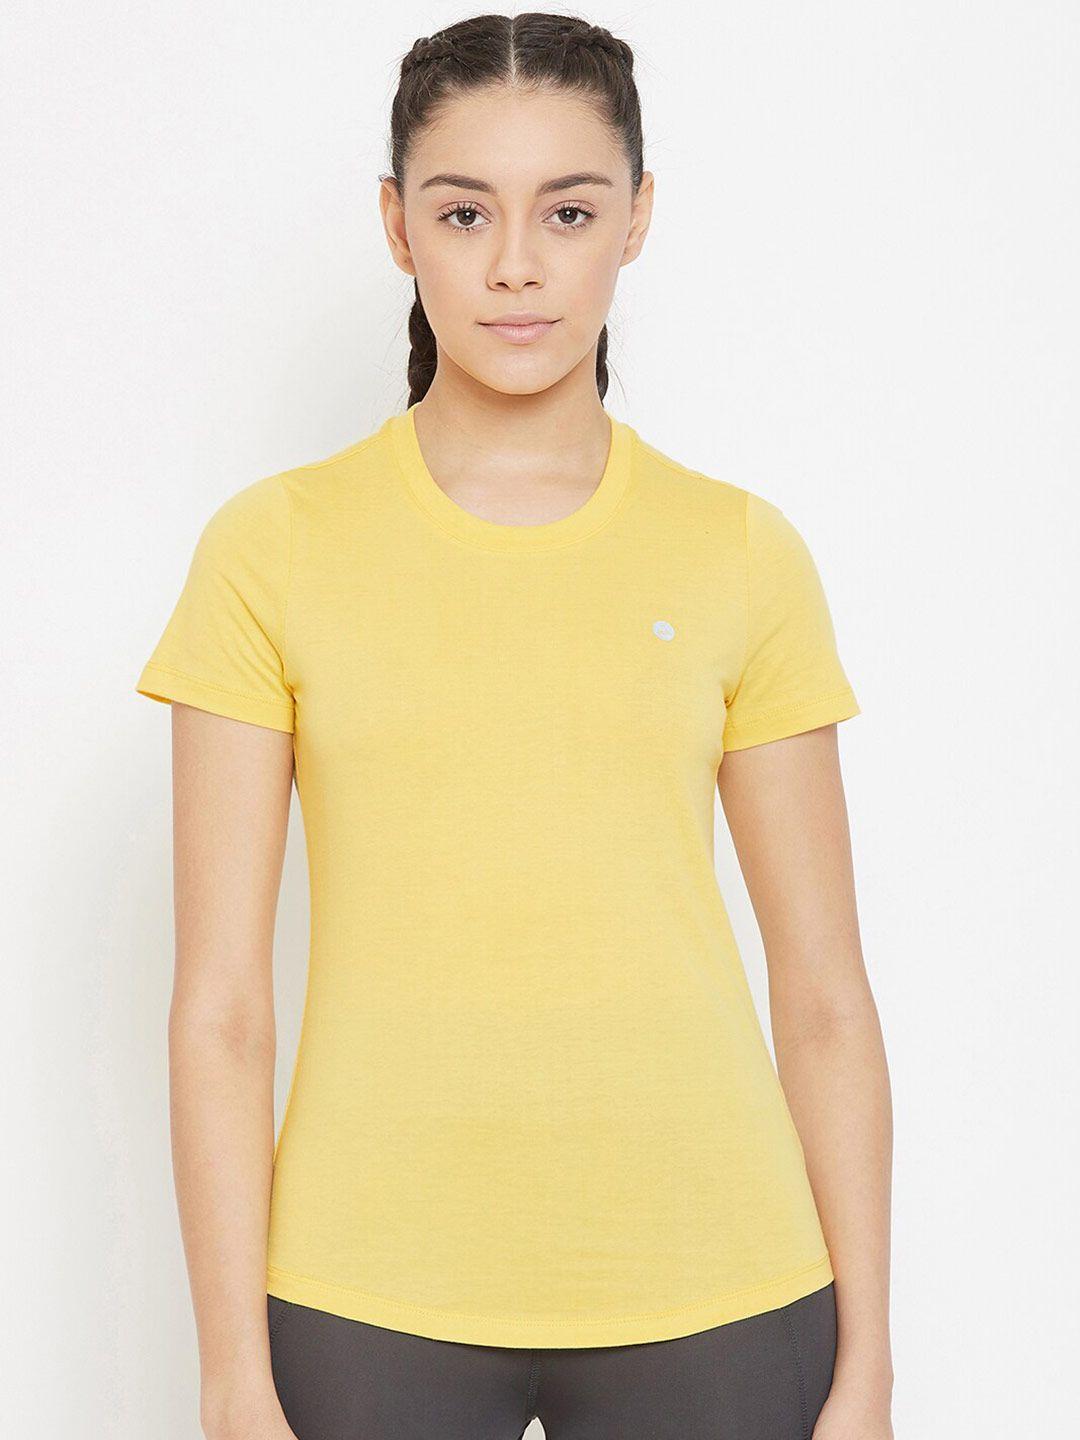 athlisis women yellow solid lightweight quick dry round neck running t-shirt